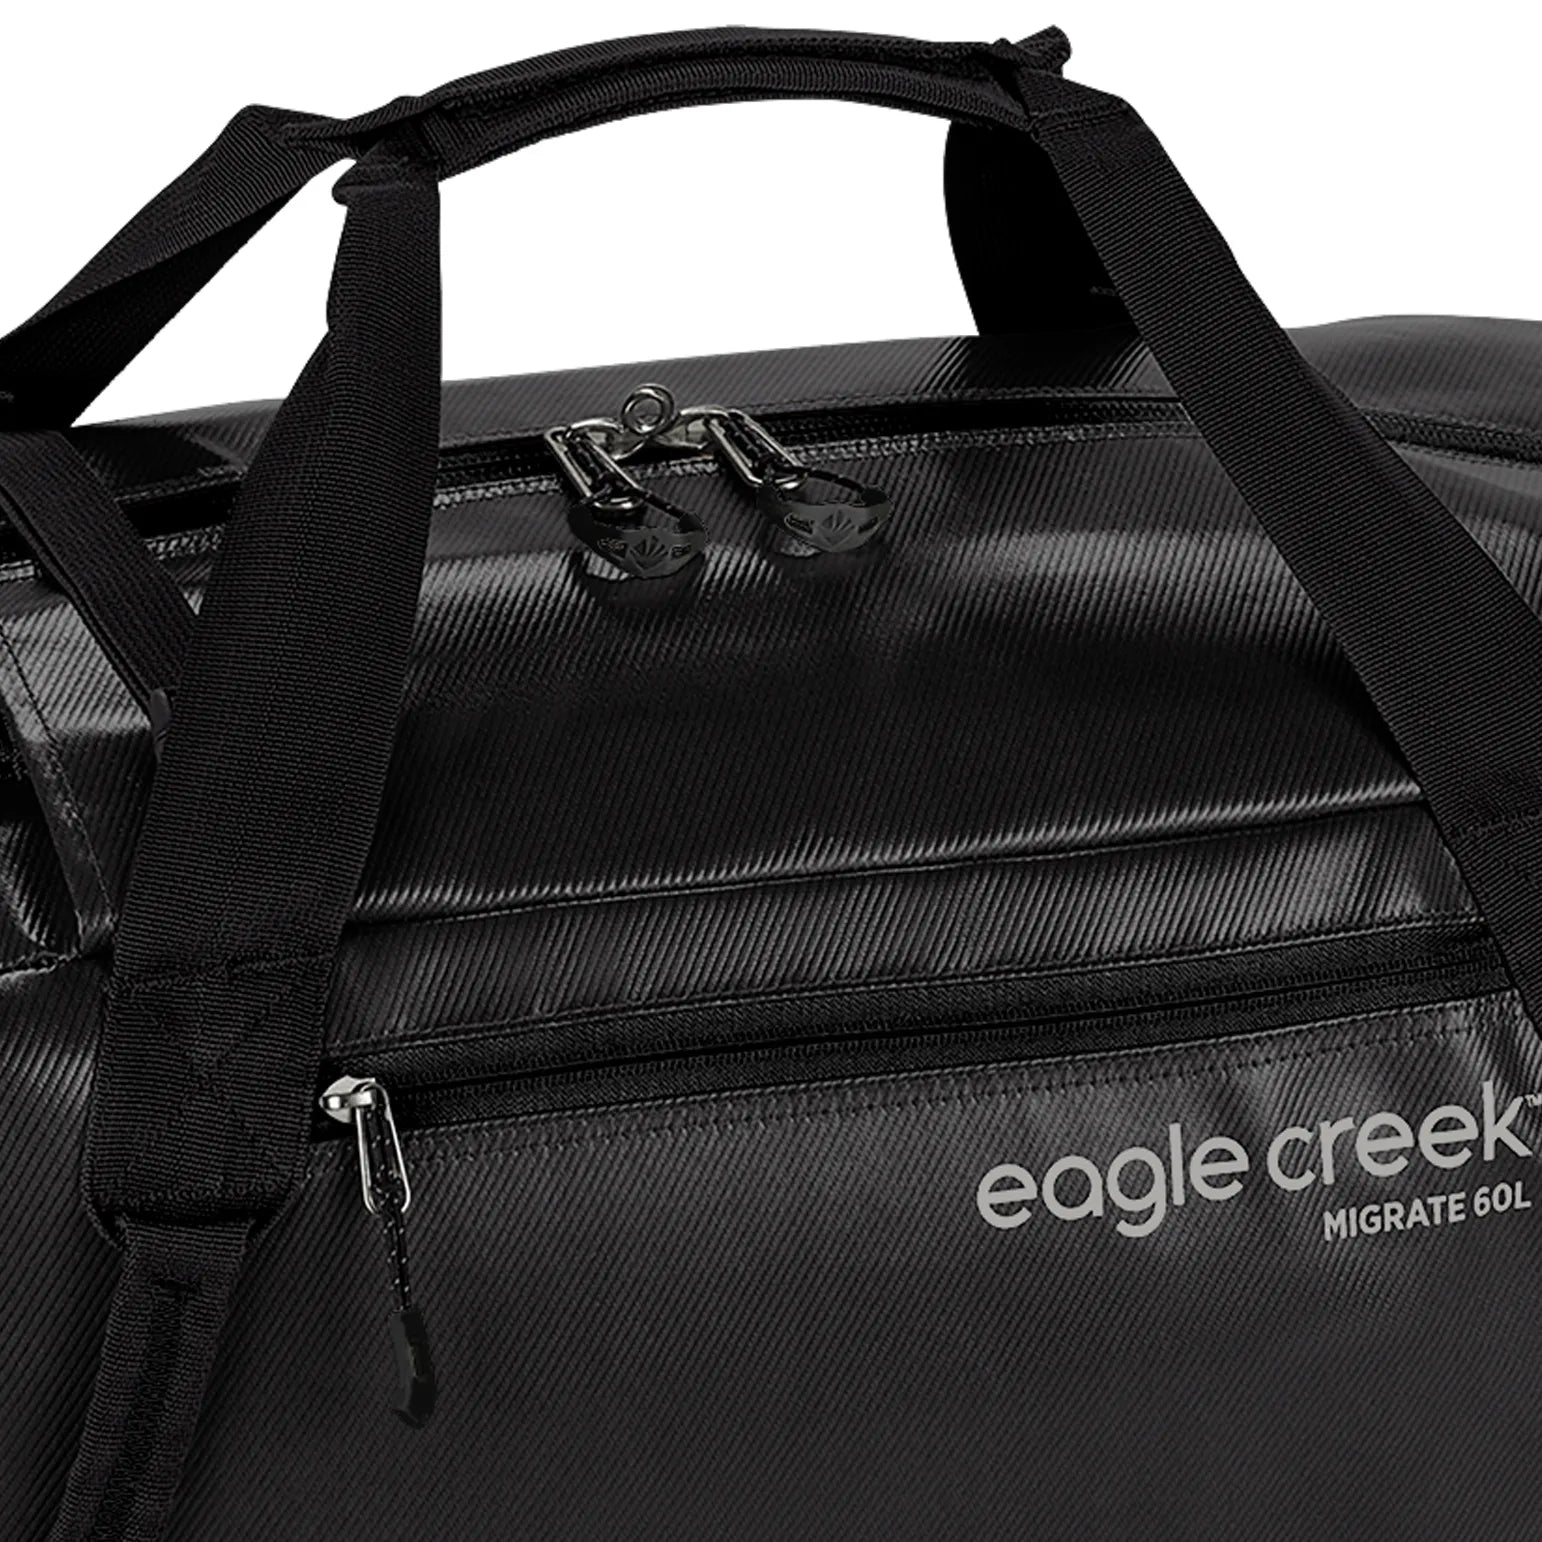 Eagle Creek Migrate Travel Bag 59 cm - mesa blue